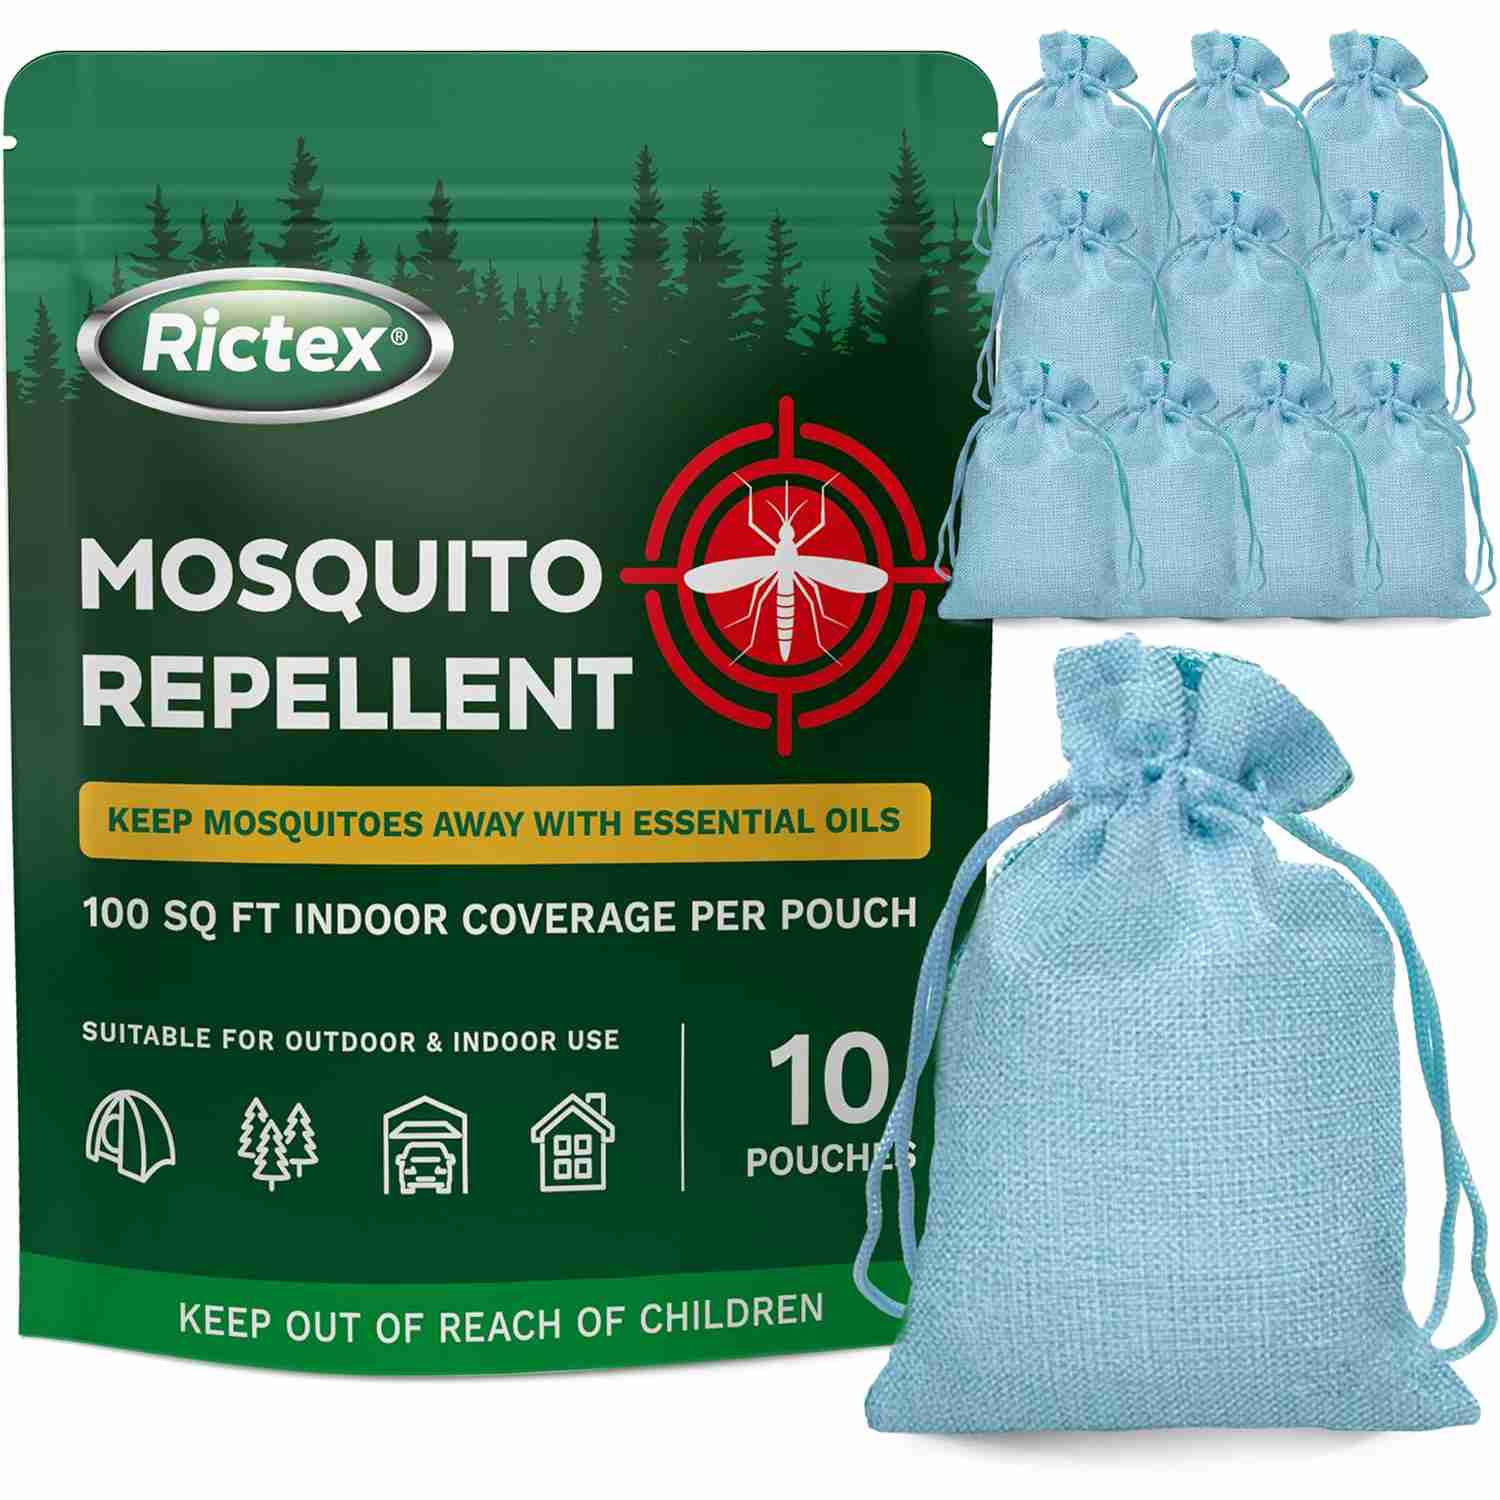 mosquito-repellent-outdoor-patio-b0cfsq9tdq with cash back rebate